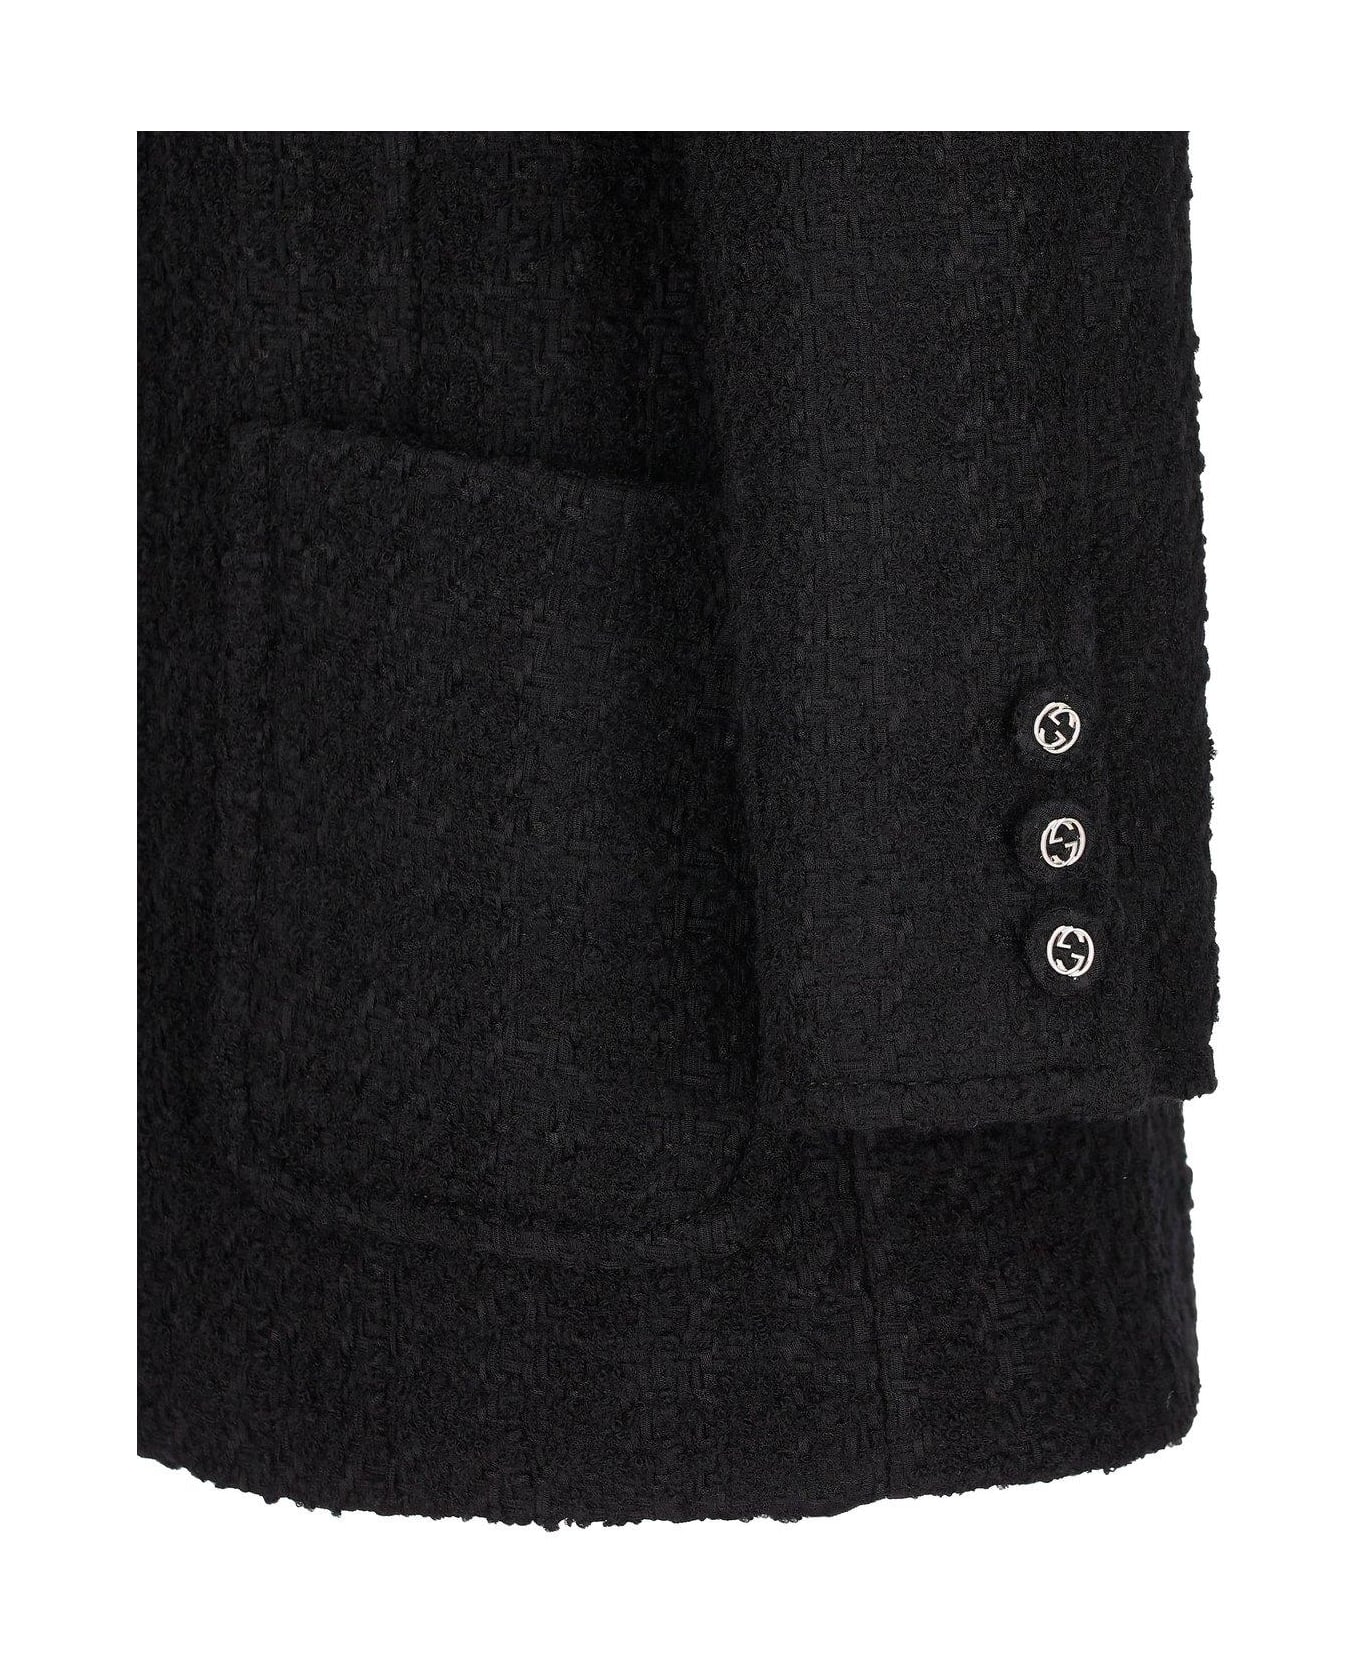 Gucci Single Breasted Tweed Jacket - Black コート